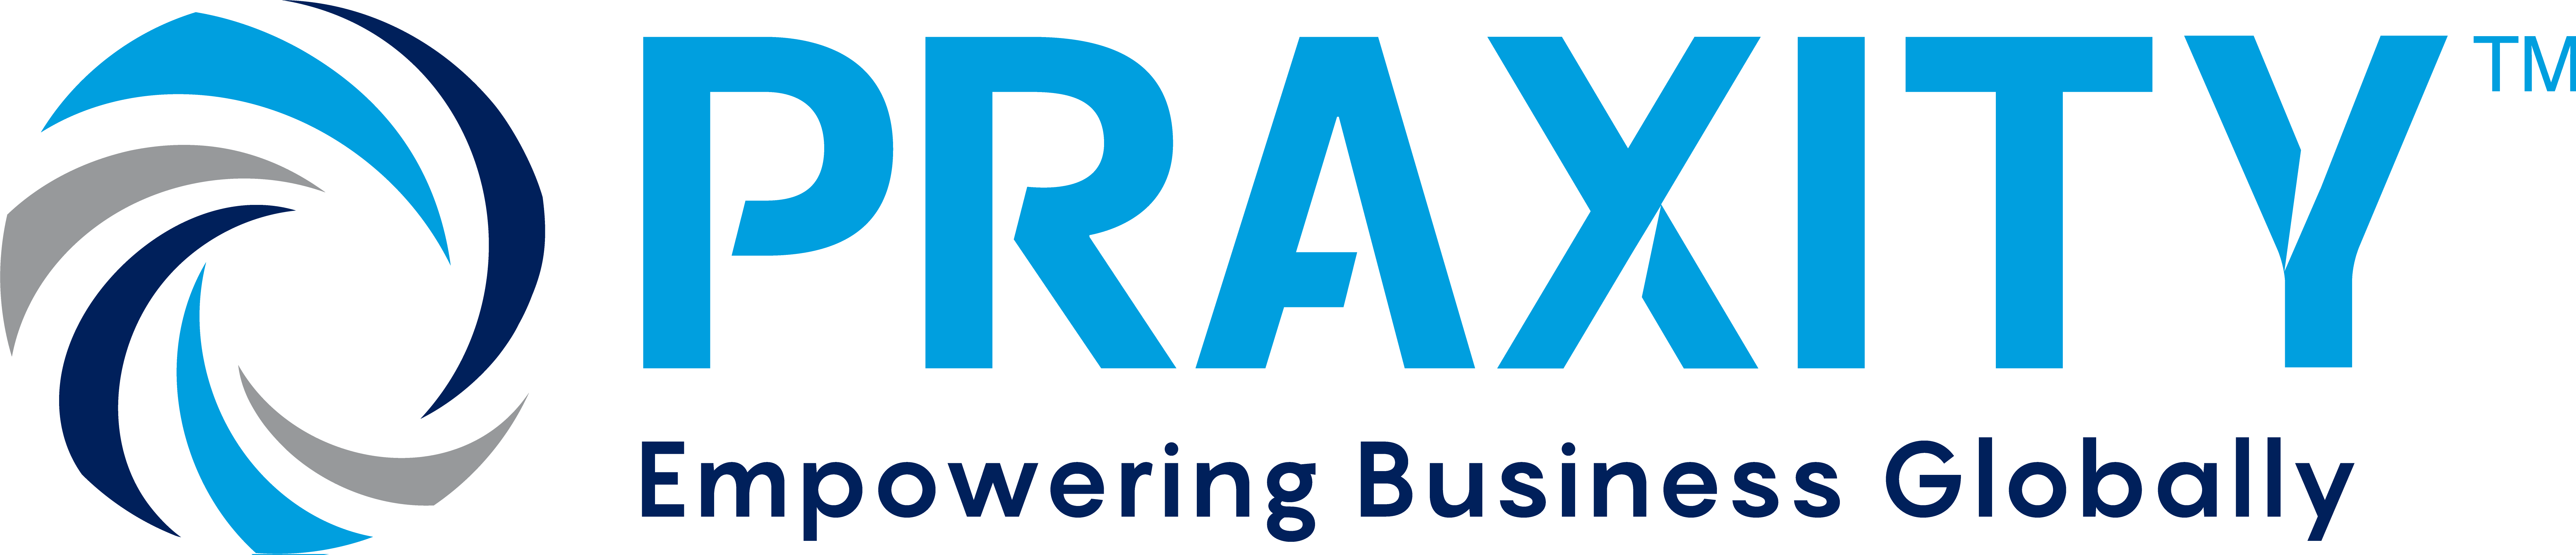 Praxity Global Alliance Logo